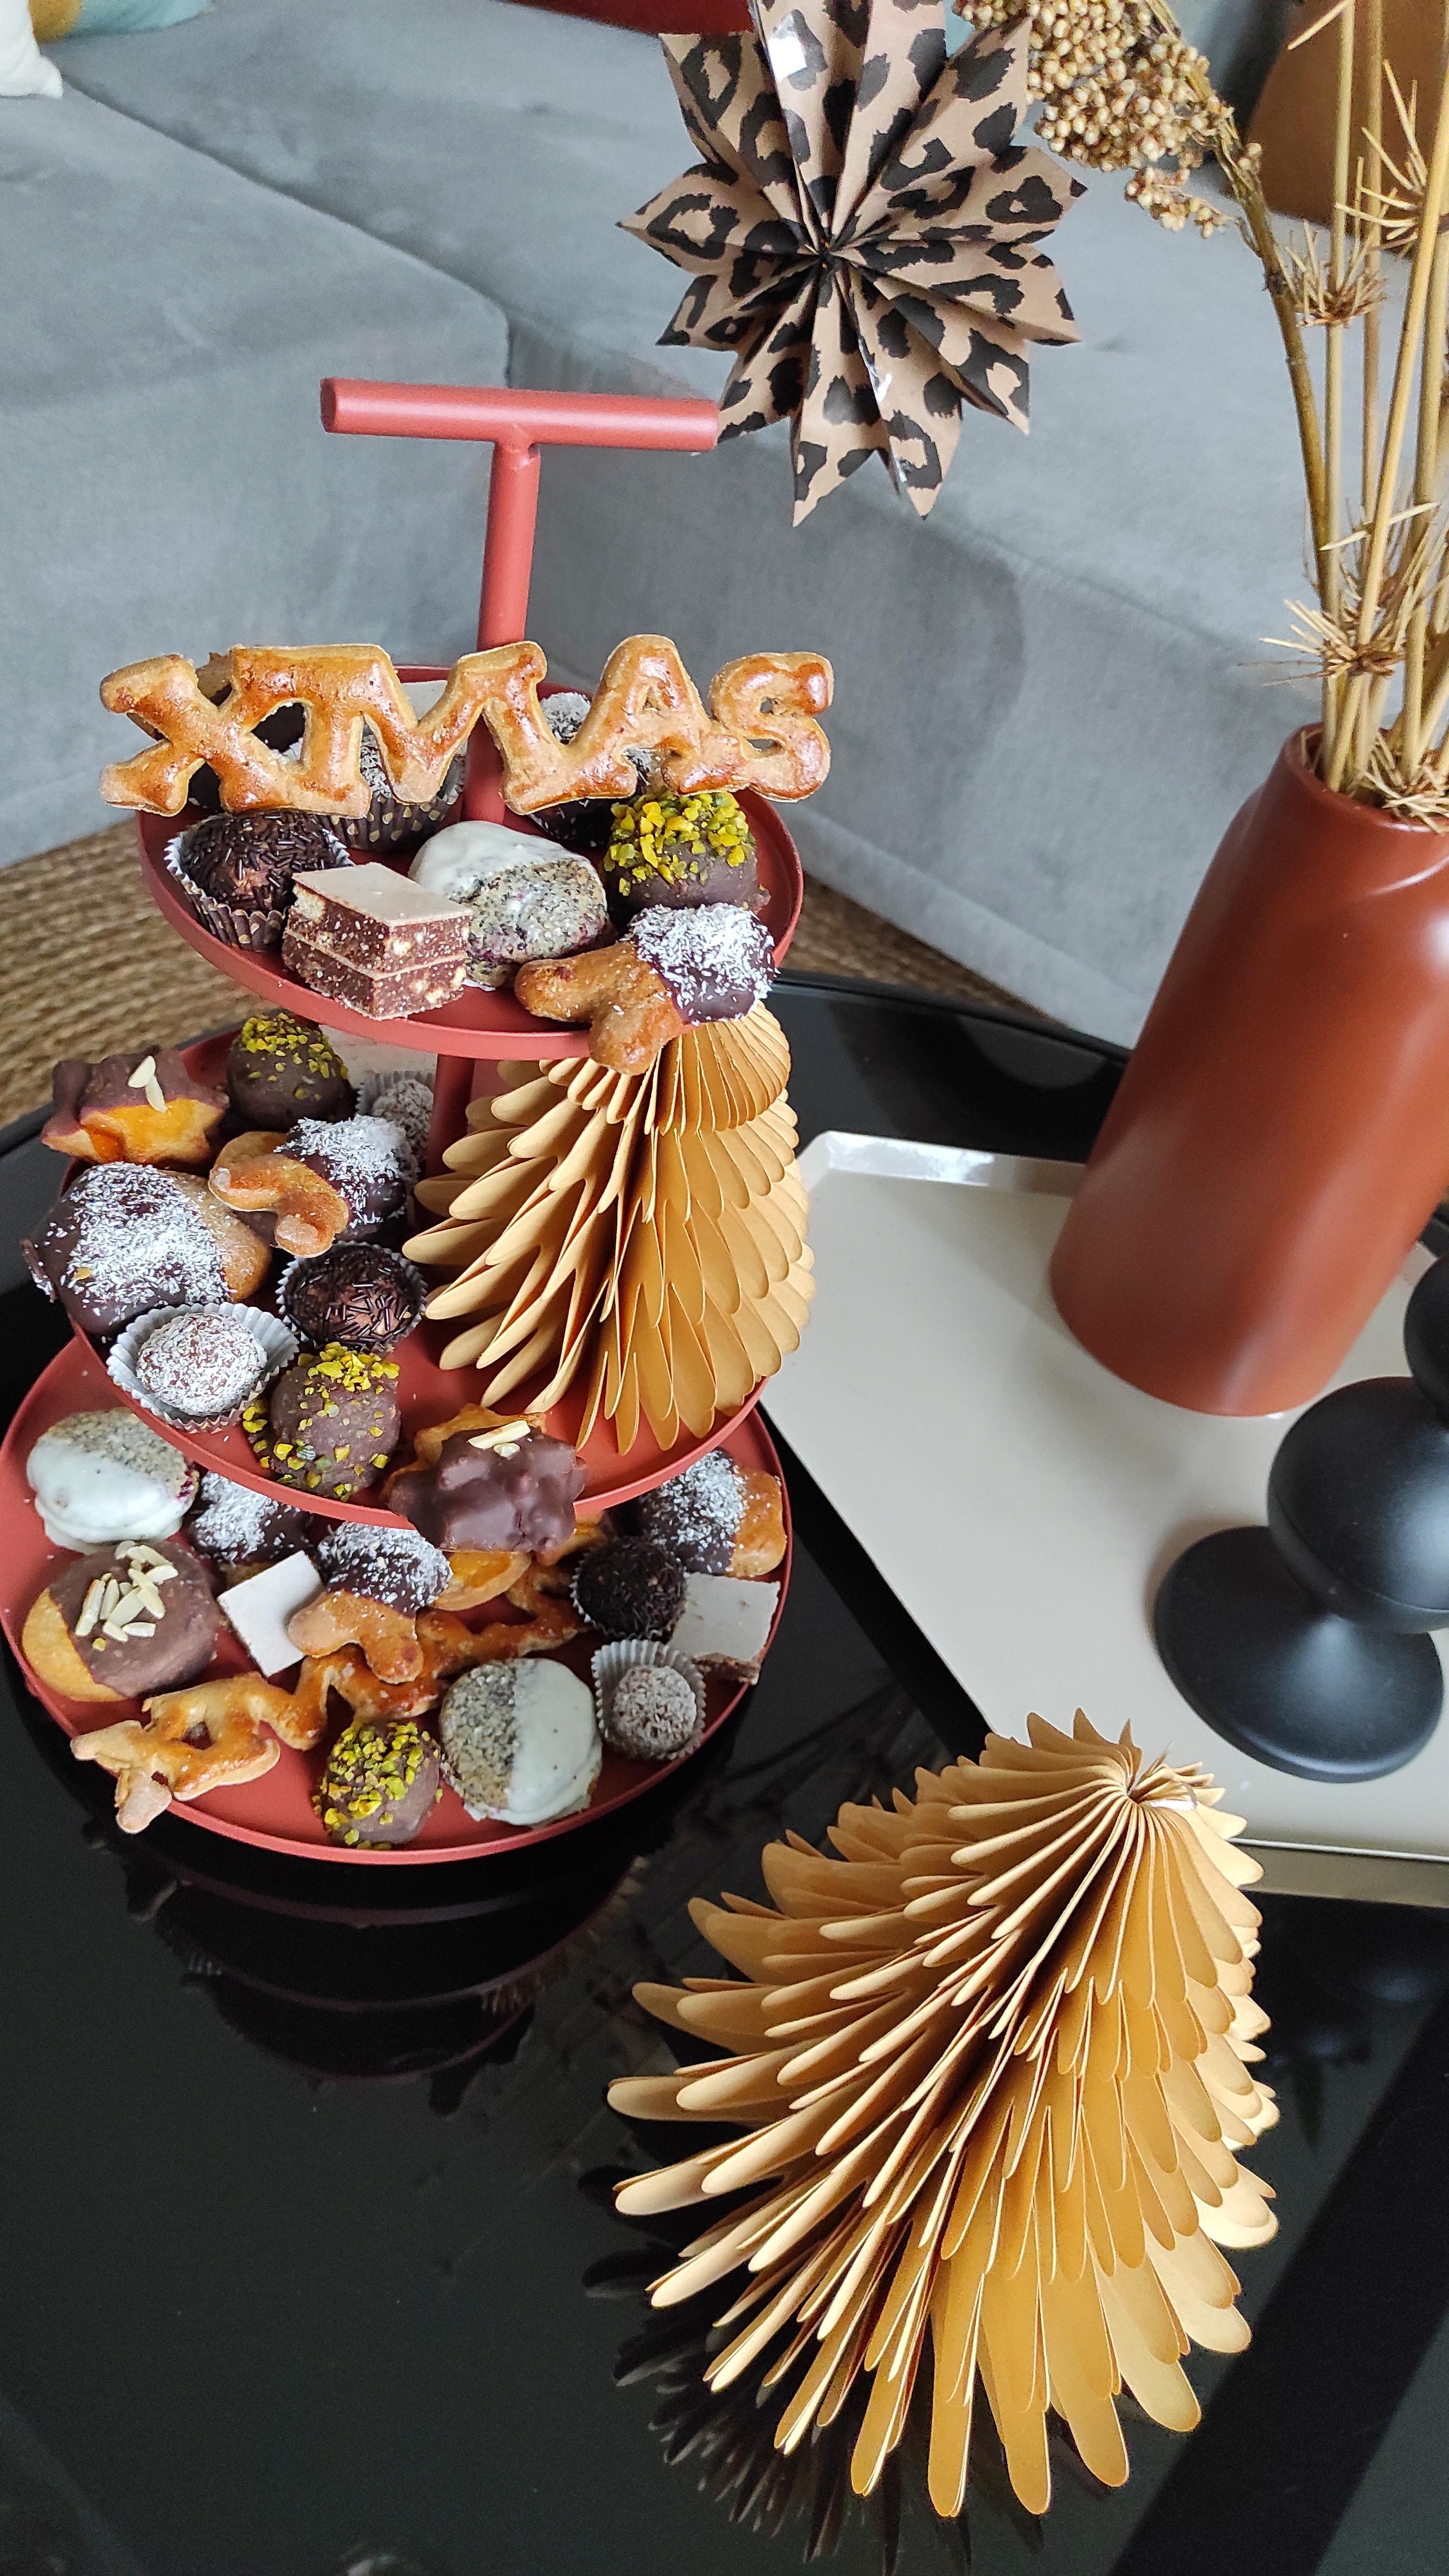 #kekse #keksebacken #weihnachtsbäckerei #selbstgemacht #decor #decoration #xmas #baking #advent #adventzeit #cozy #hygge